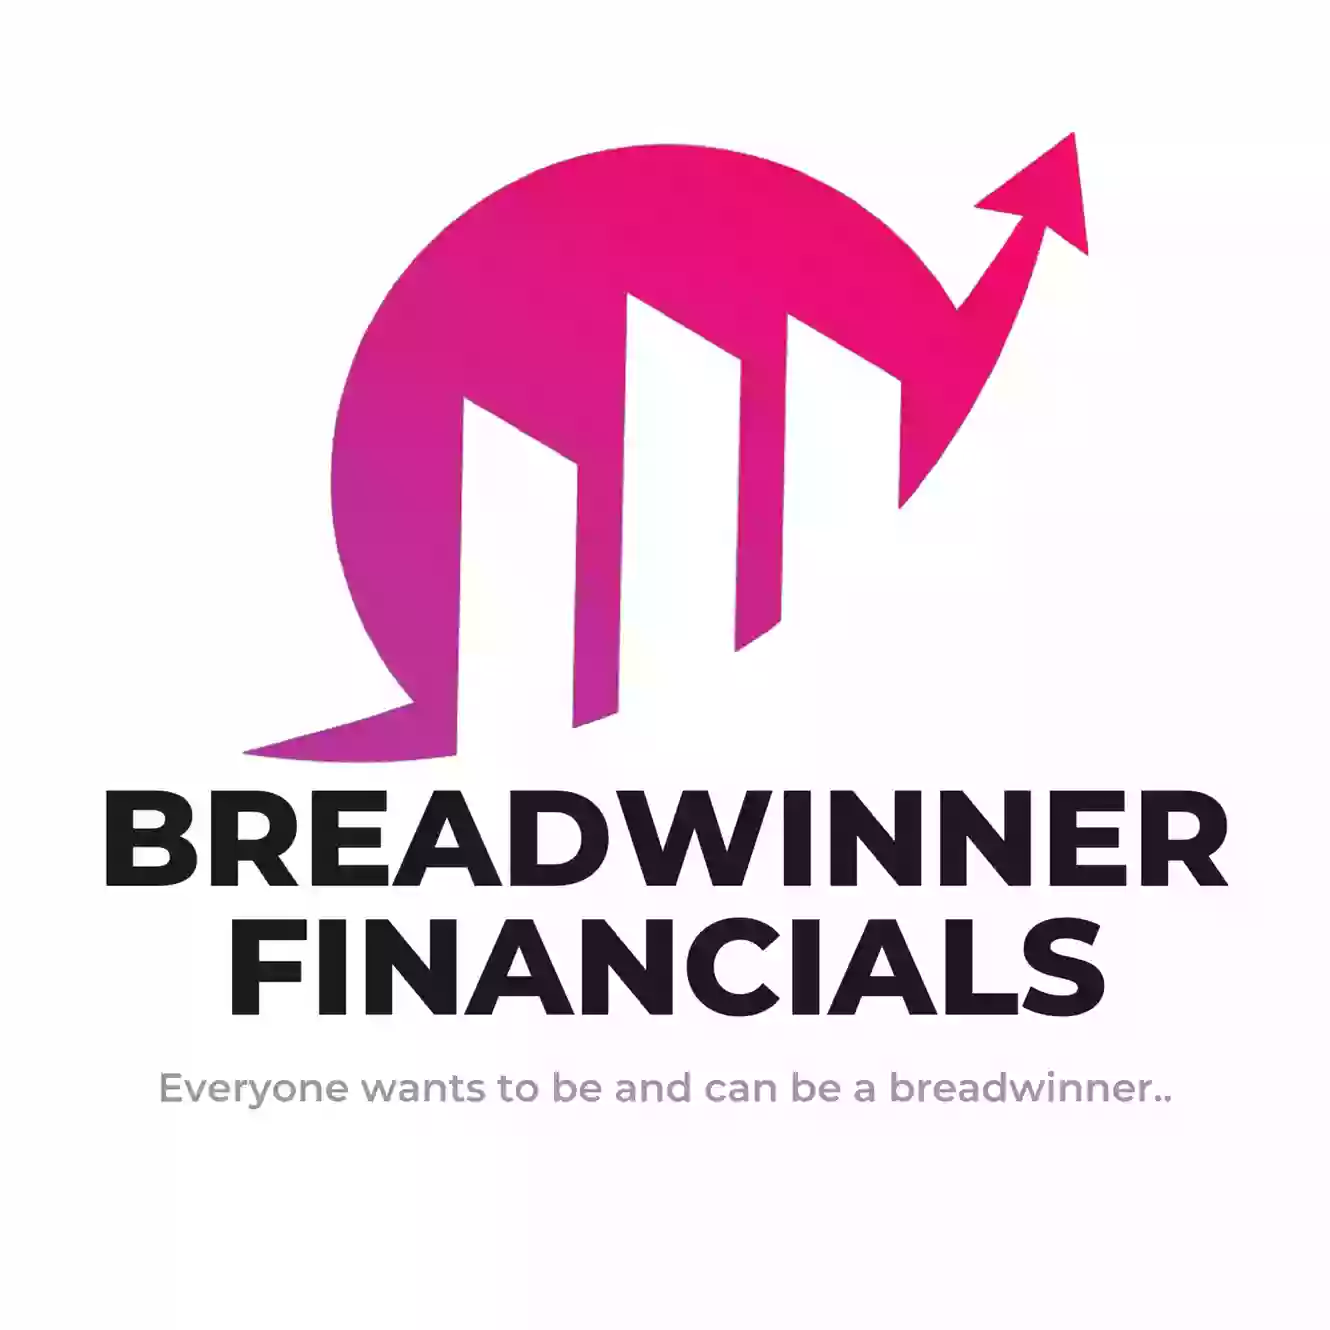 Breadwinner Financials